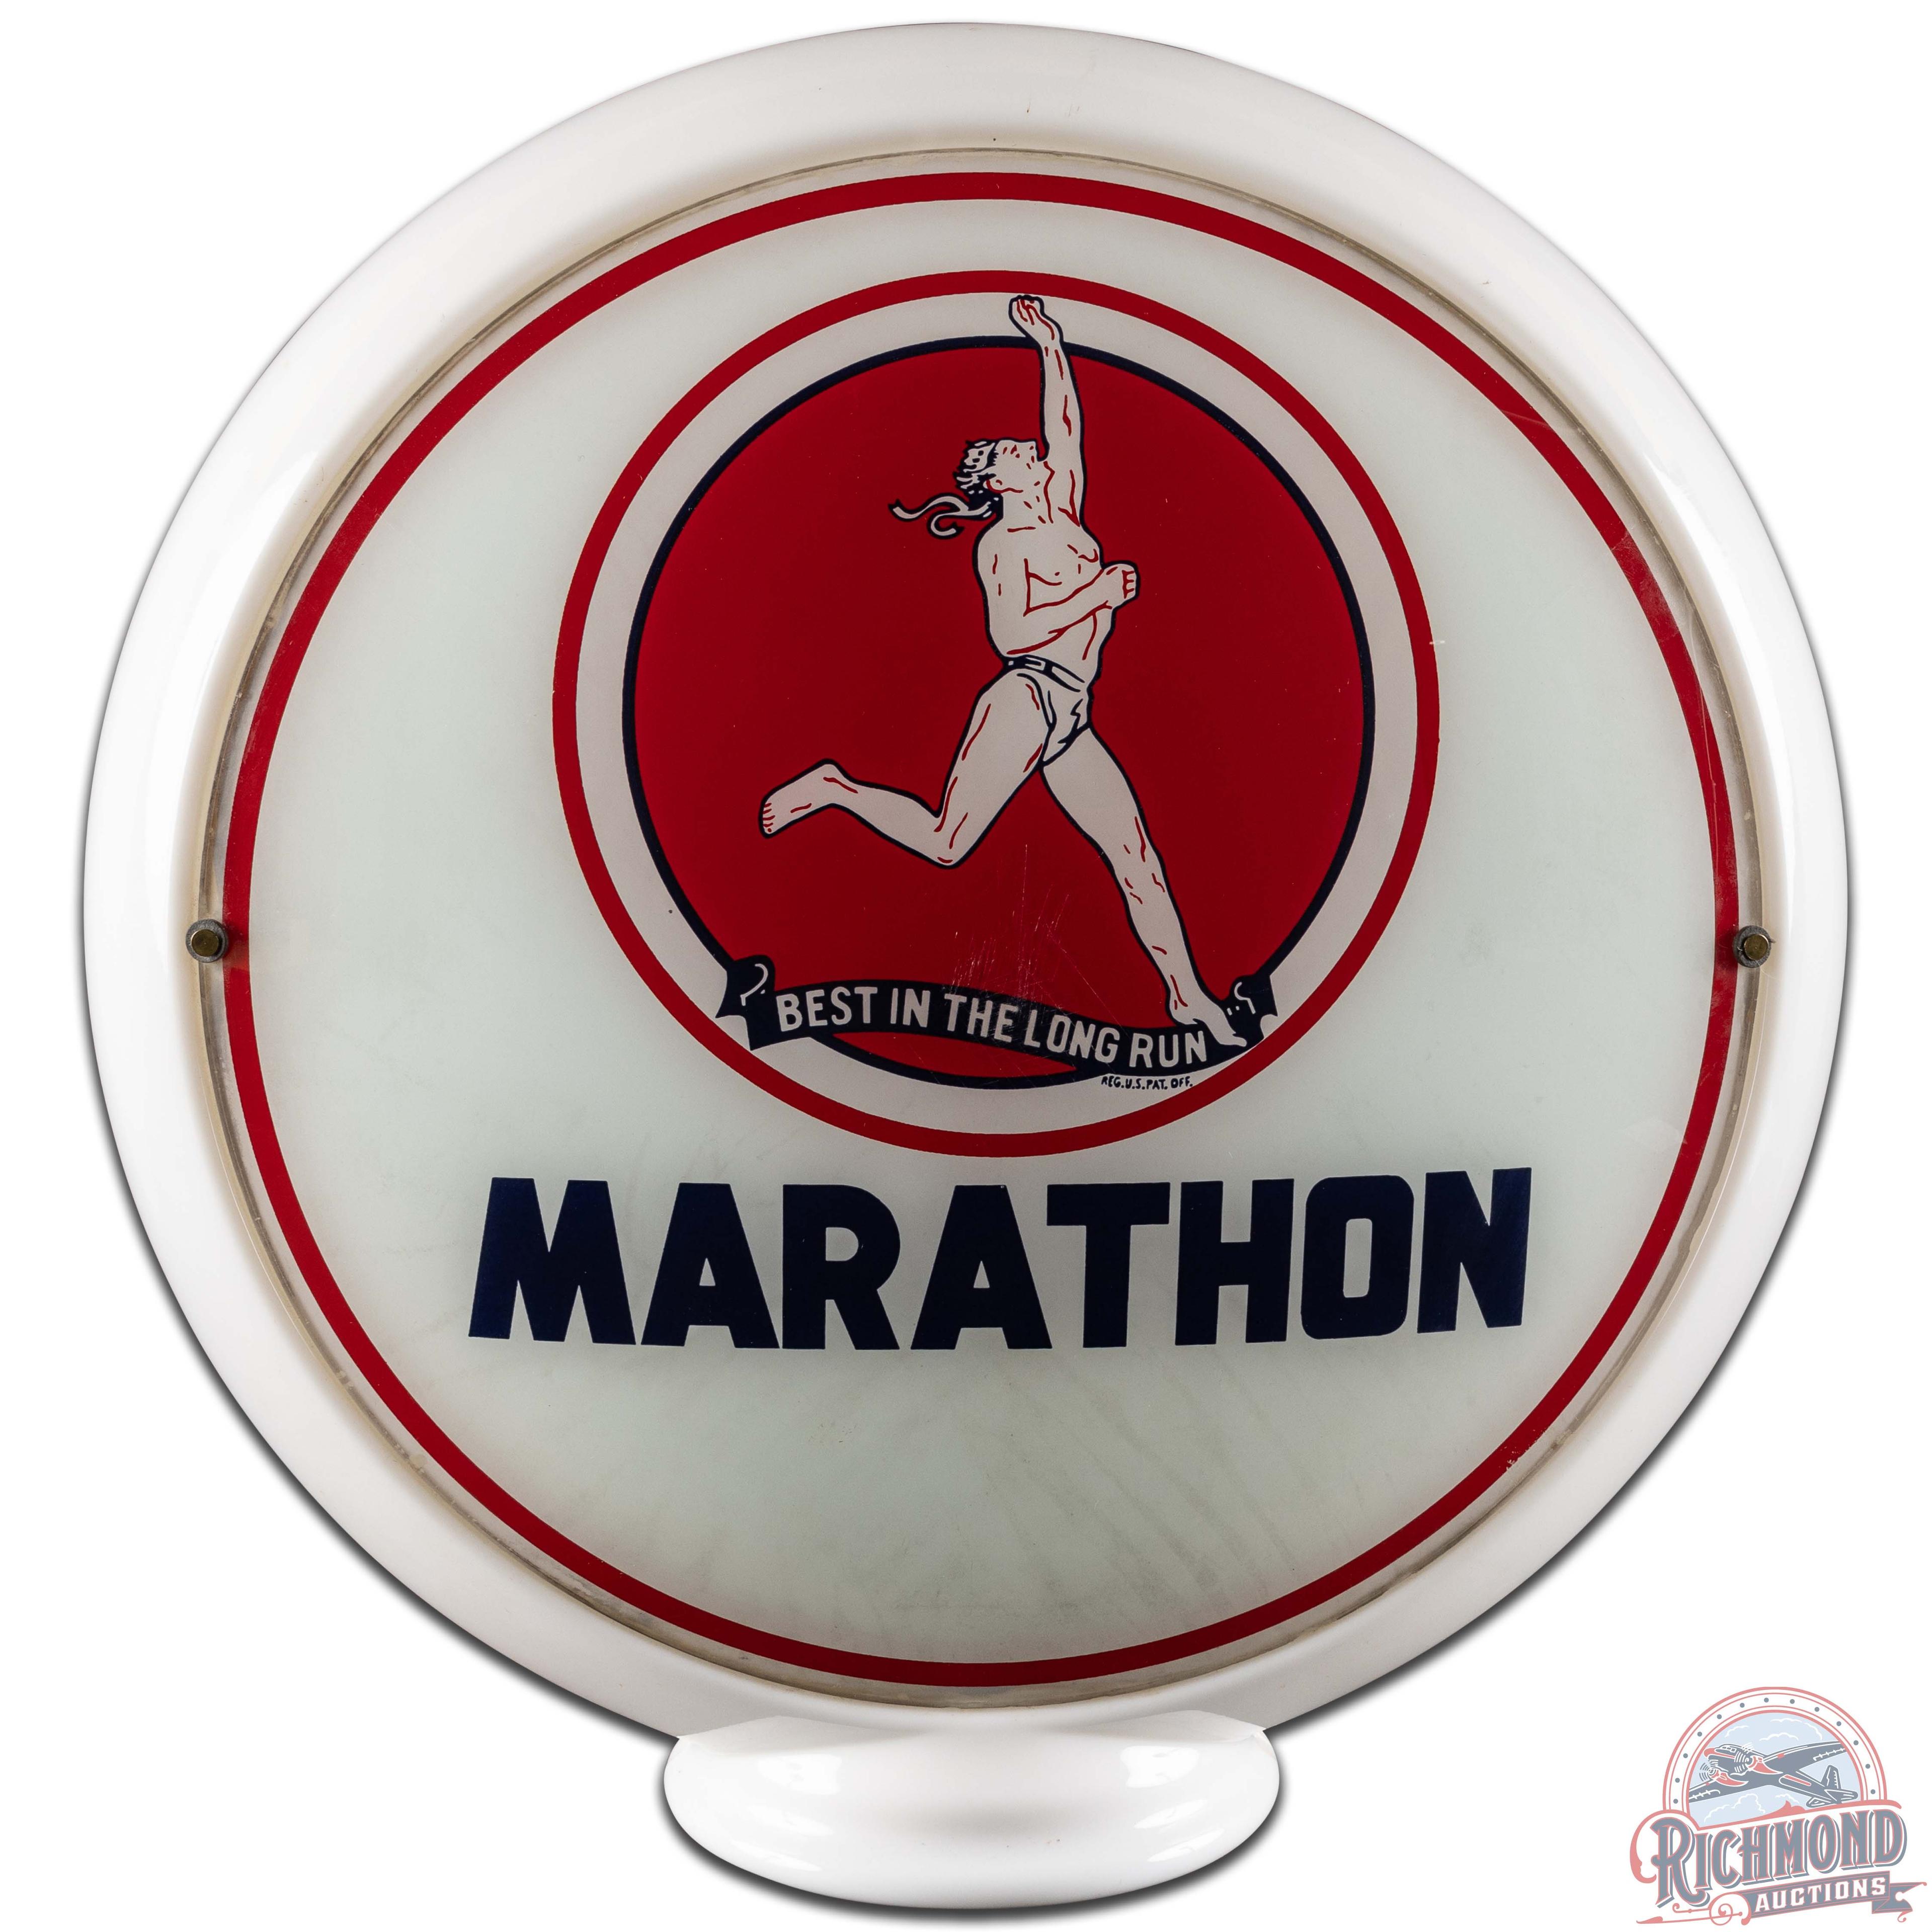 Marathon "Best in the Long Run" 13.5" Lenses w/ Narrow Milk Glass Globe Body